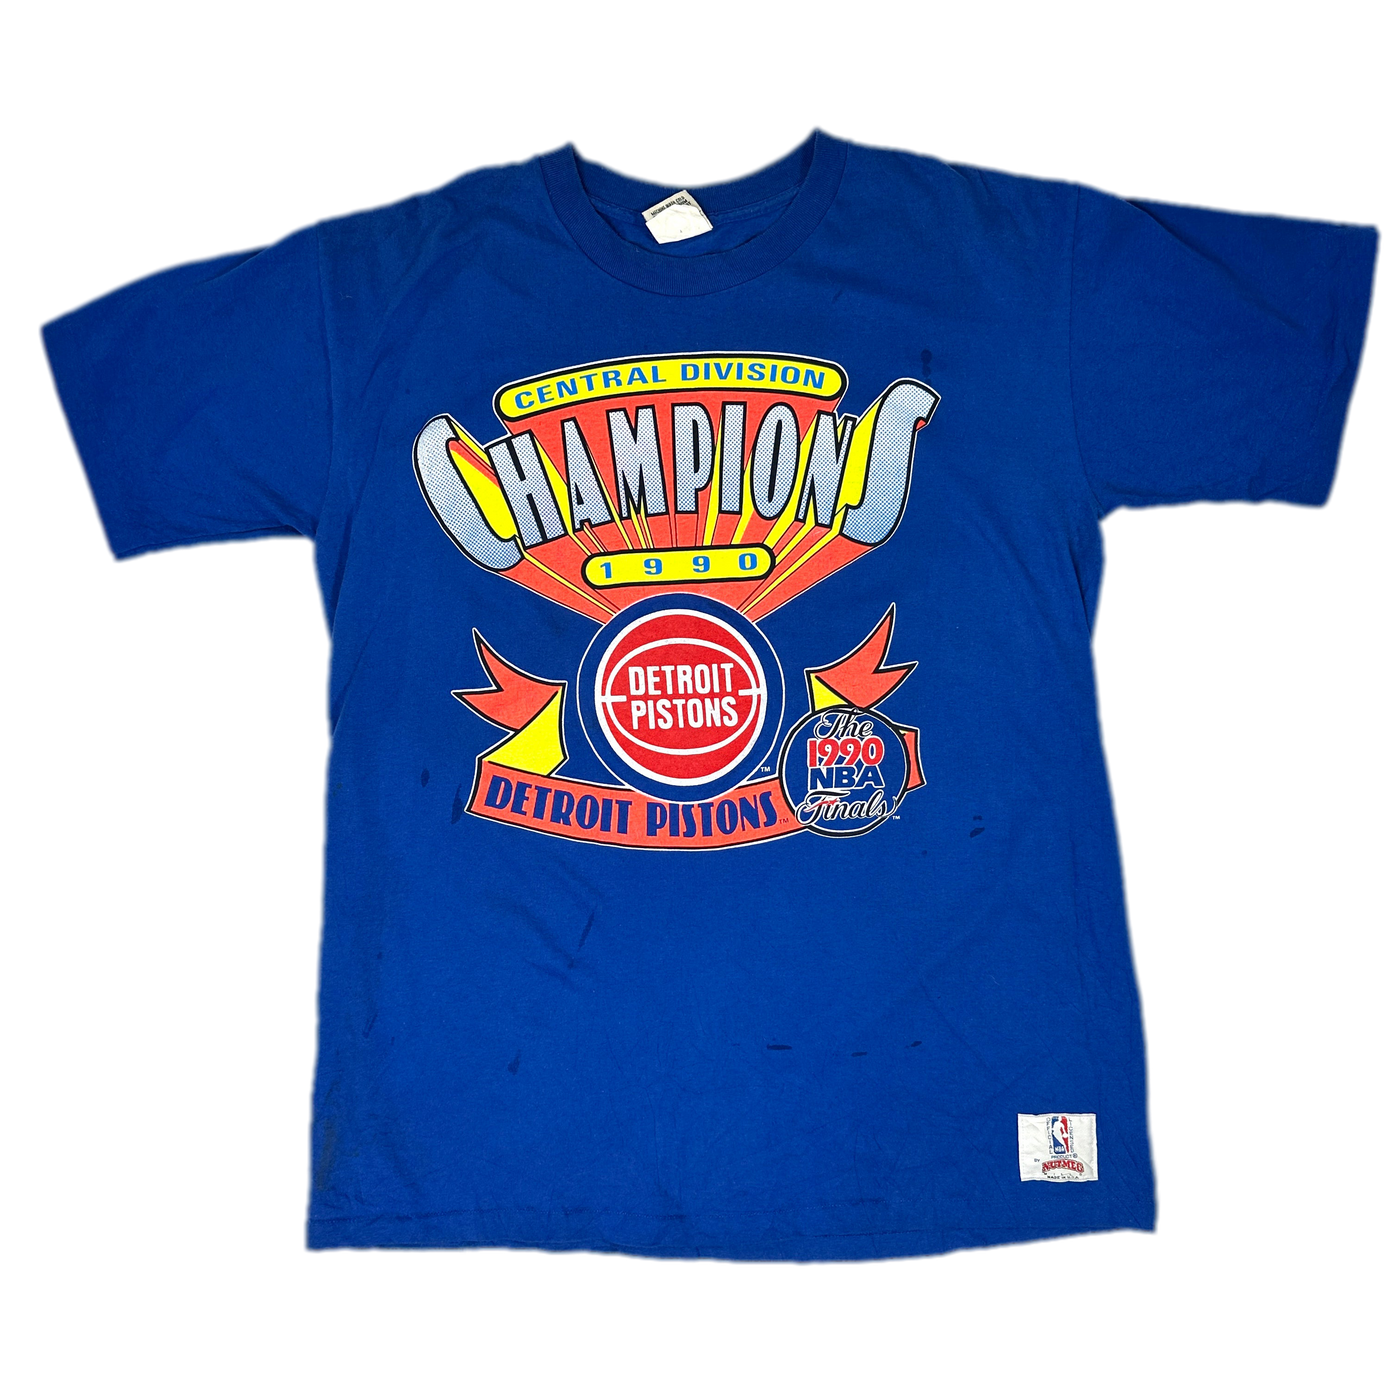 '90 Detroit Pistons Champions Sports T-Shirt sz XL